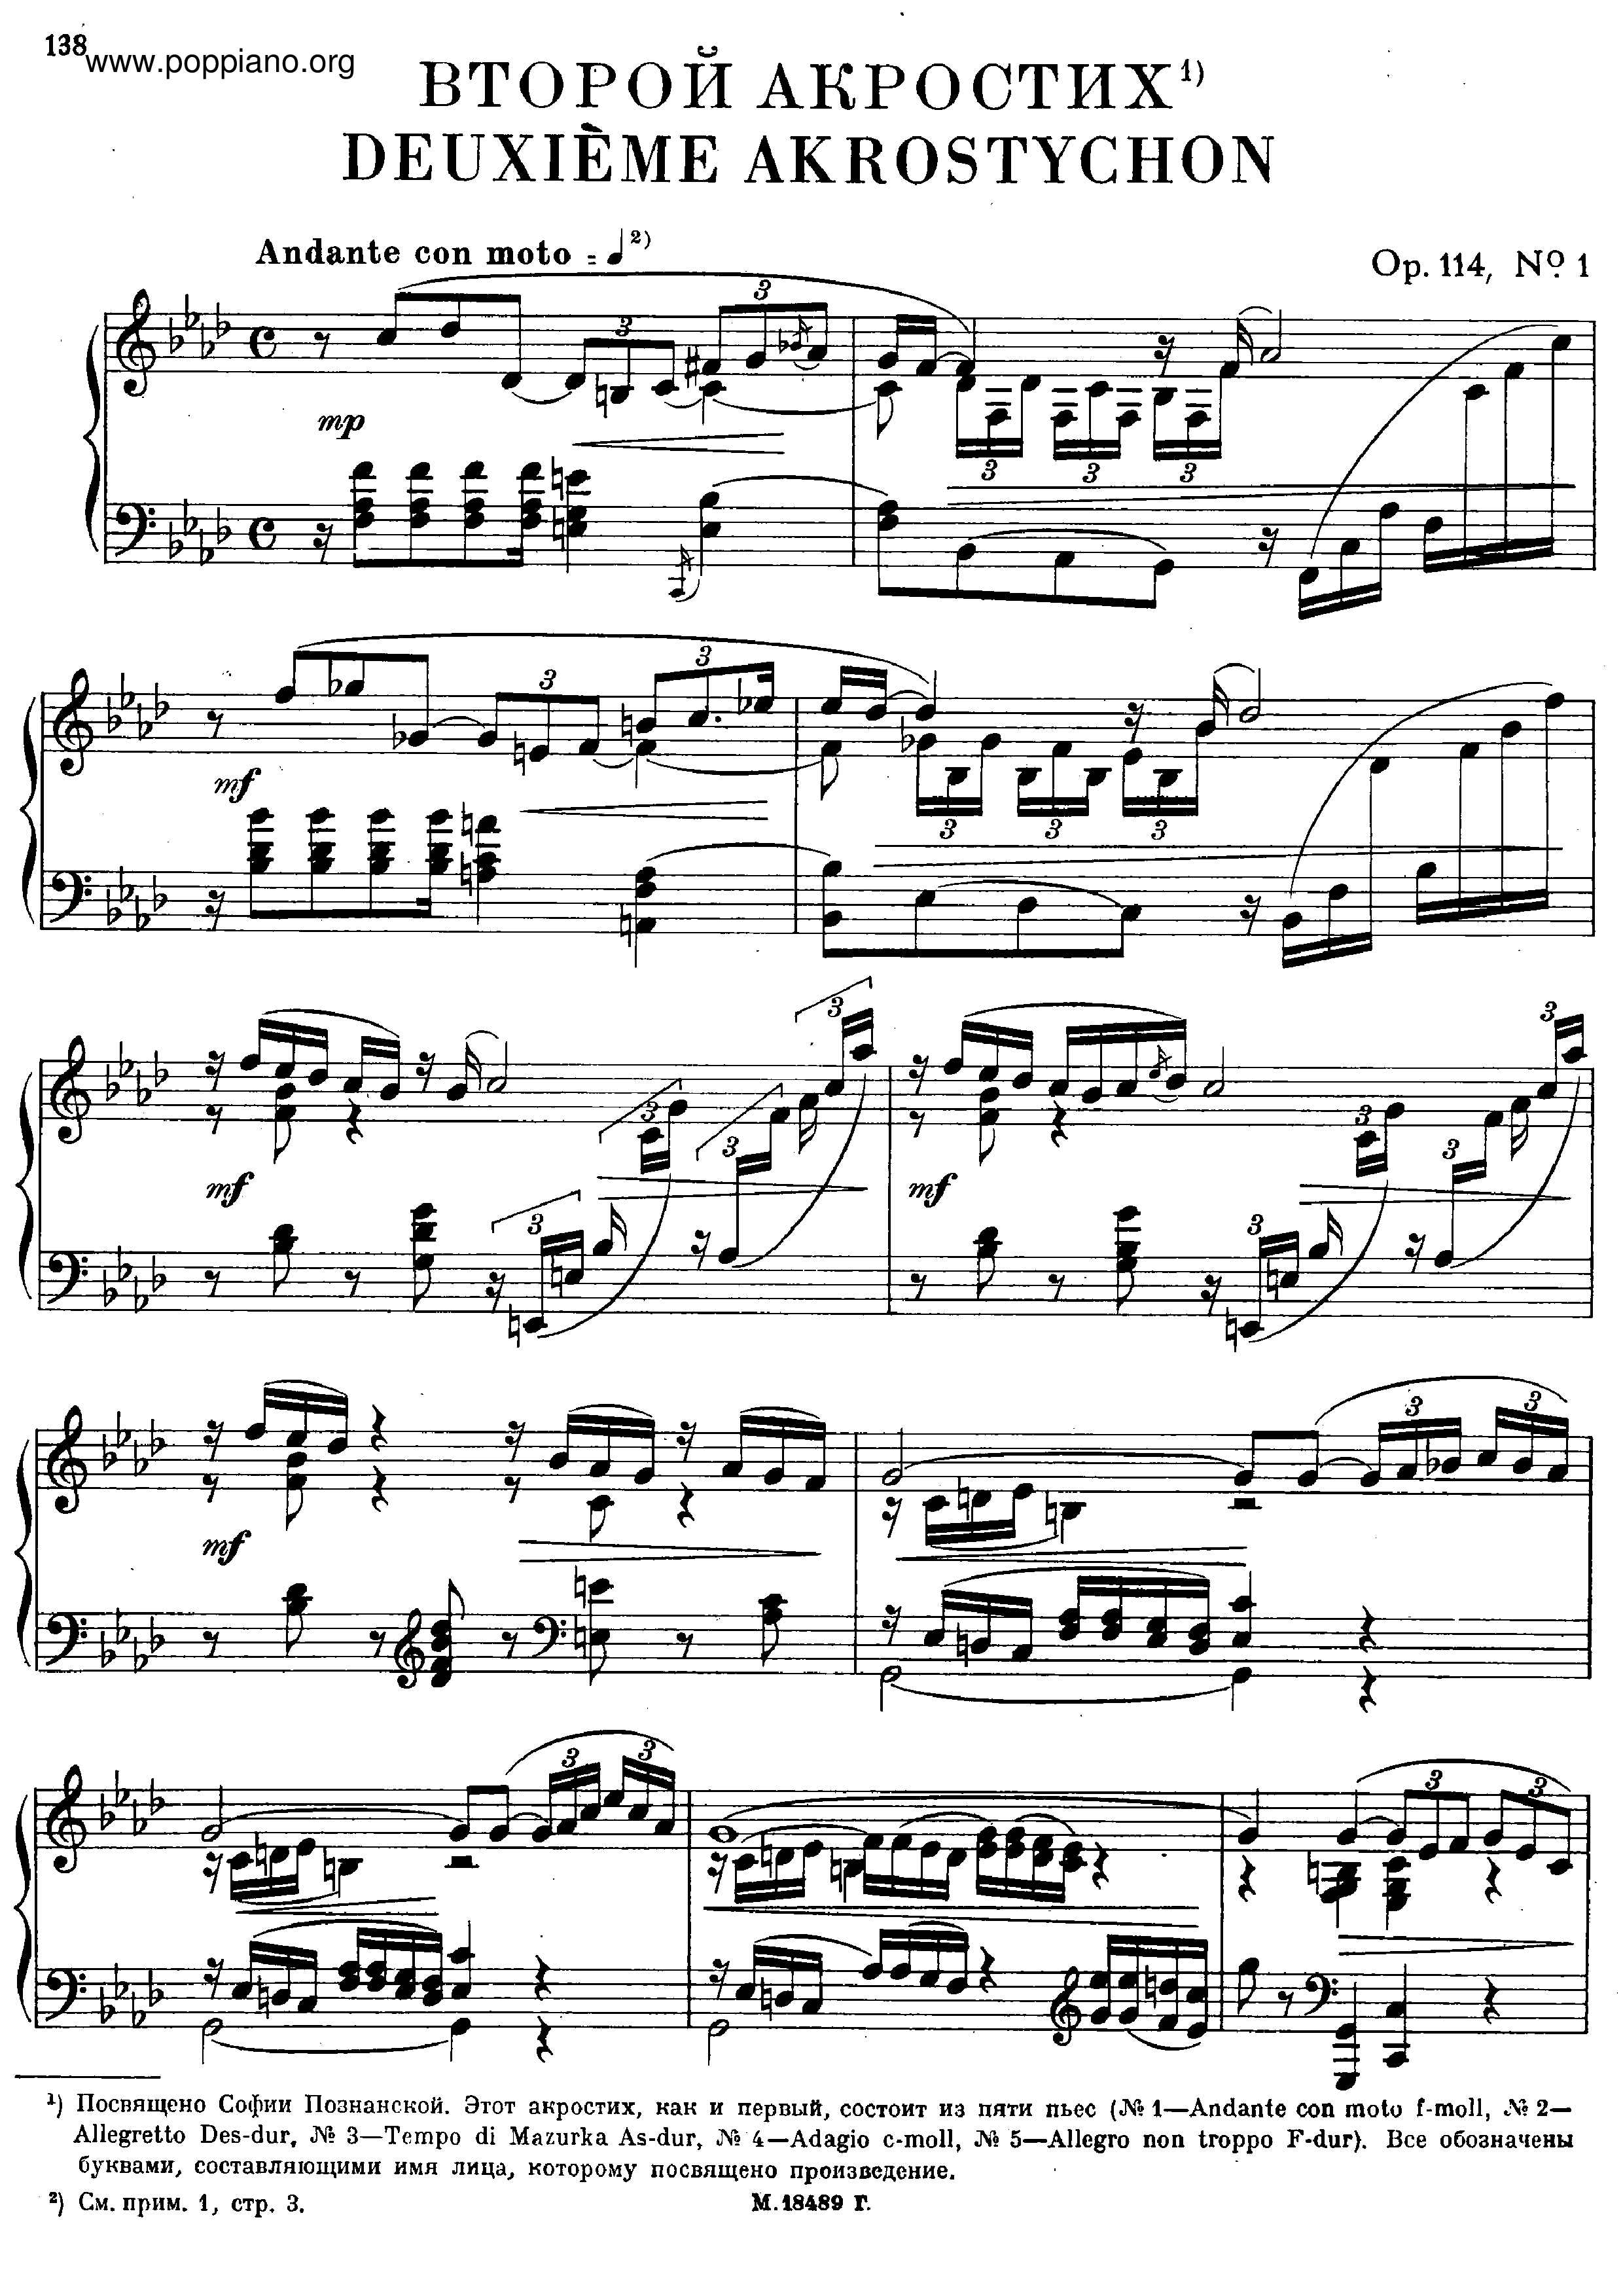 Acrostychon No.2, Op.114 Score